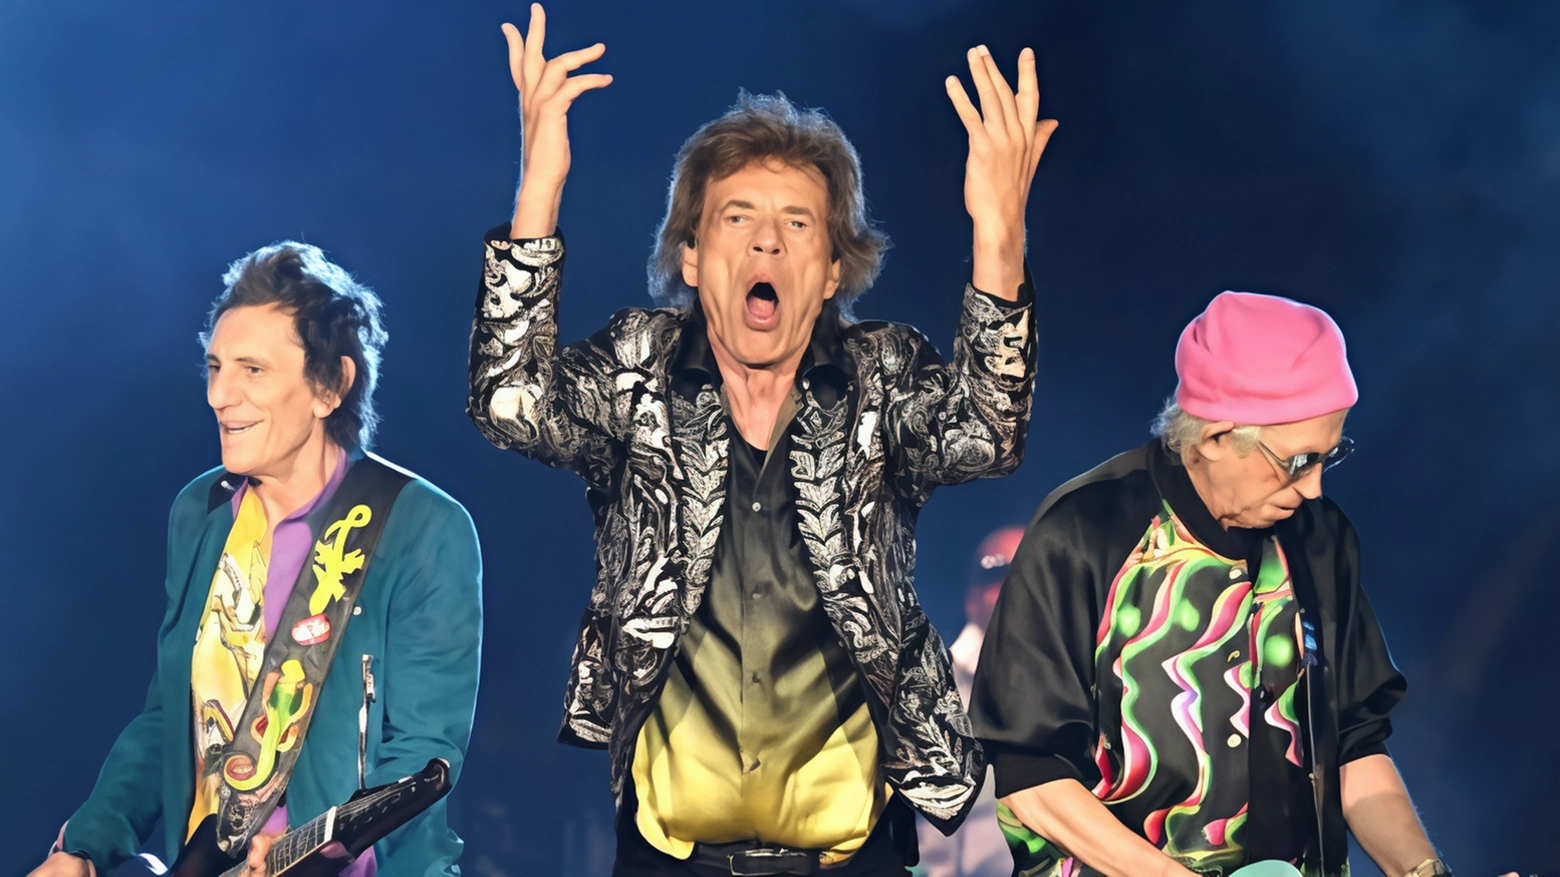 I Rolling Stones tornano a Roma